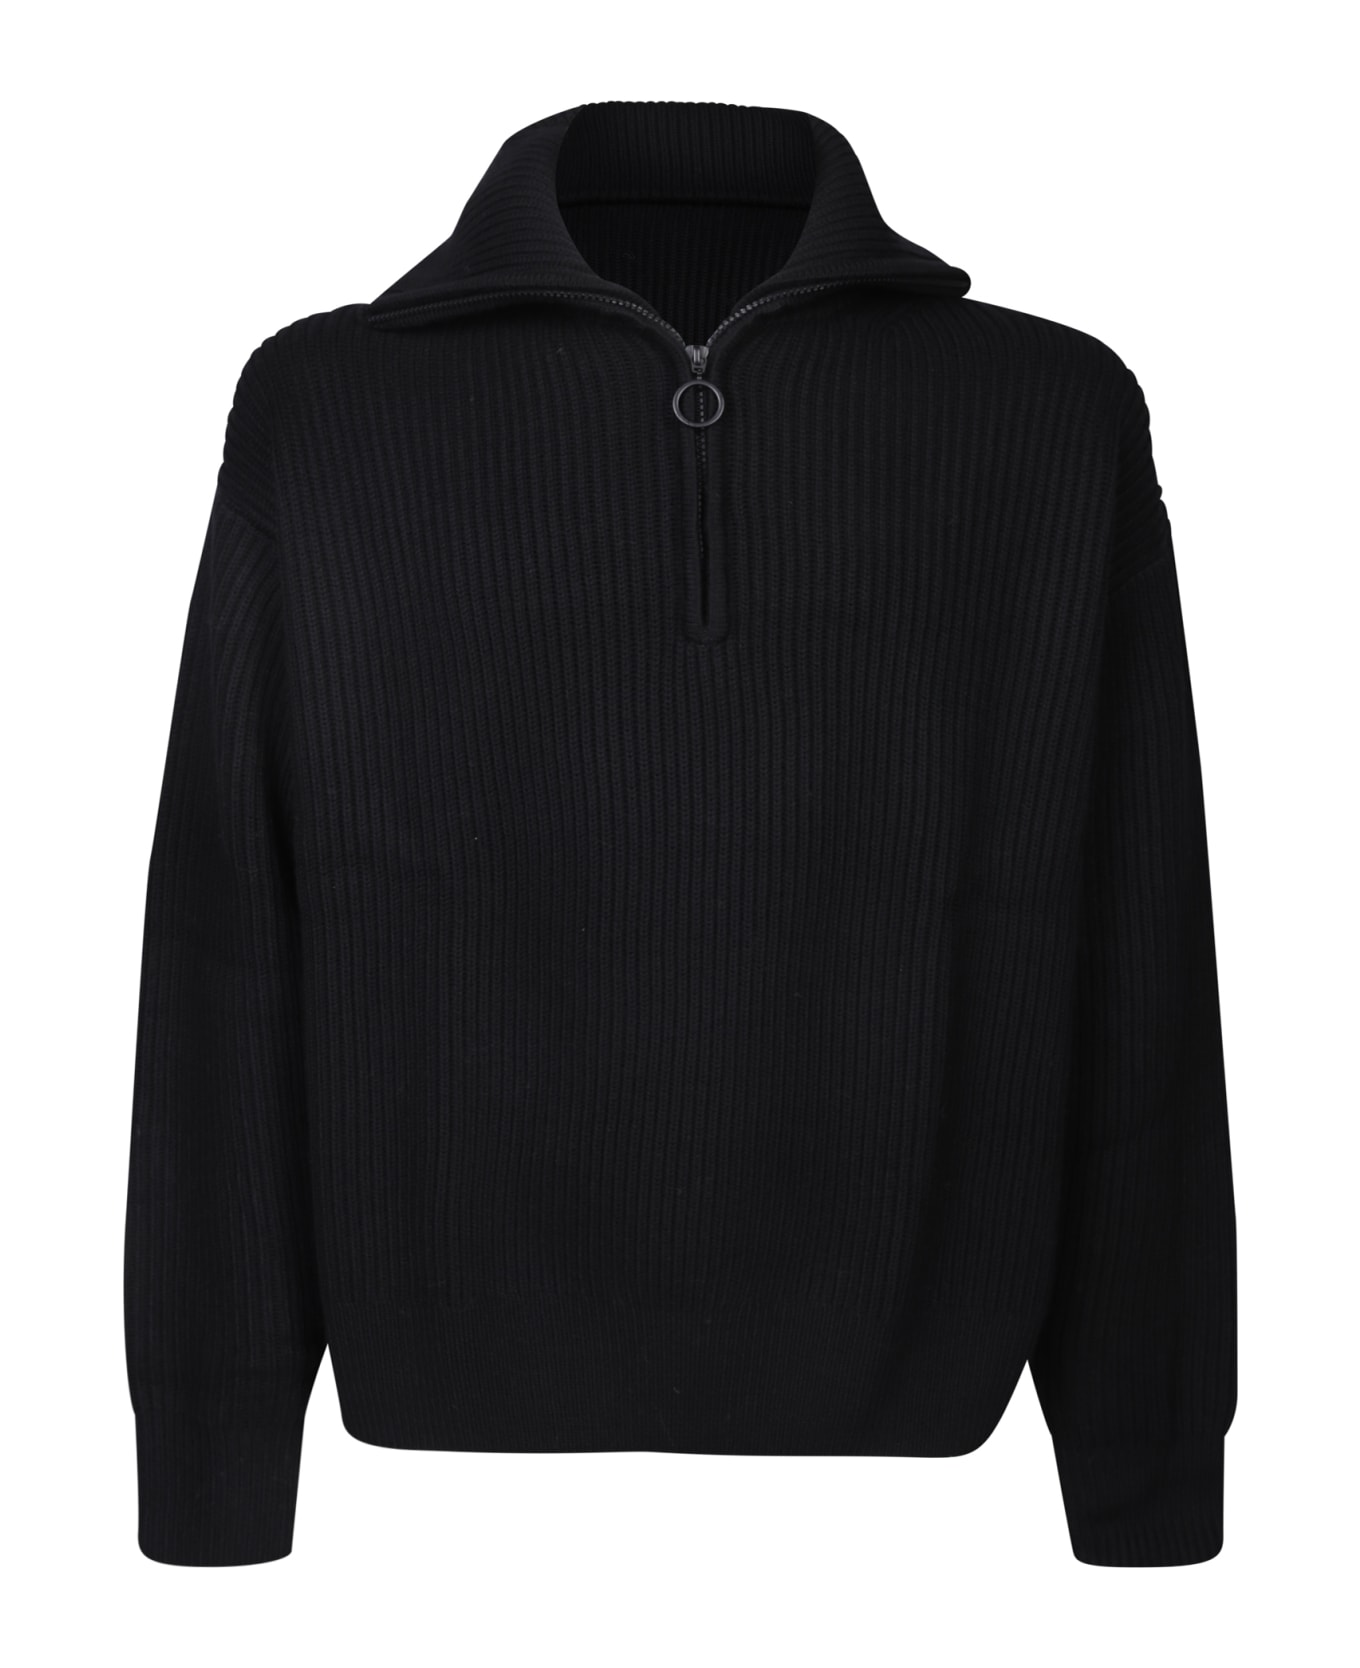 Studio Nicholson Bow Black Pullover Polo Shirt - Black フリース